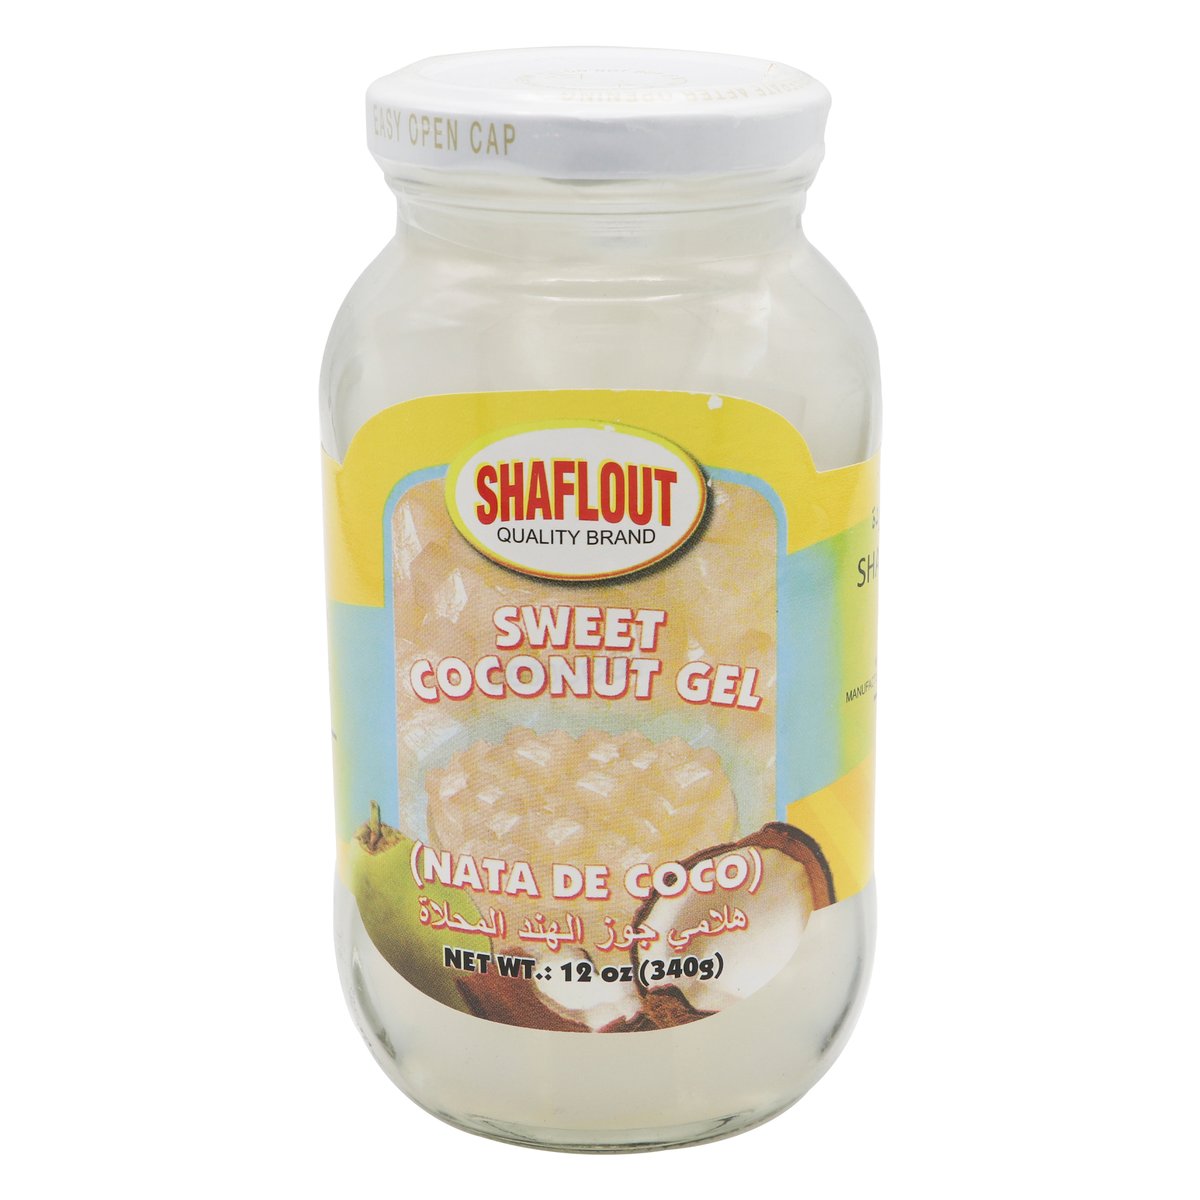 Shaflout Sweet Coconut Gel 340g